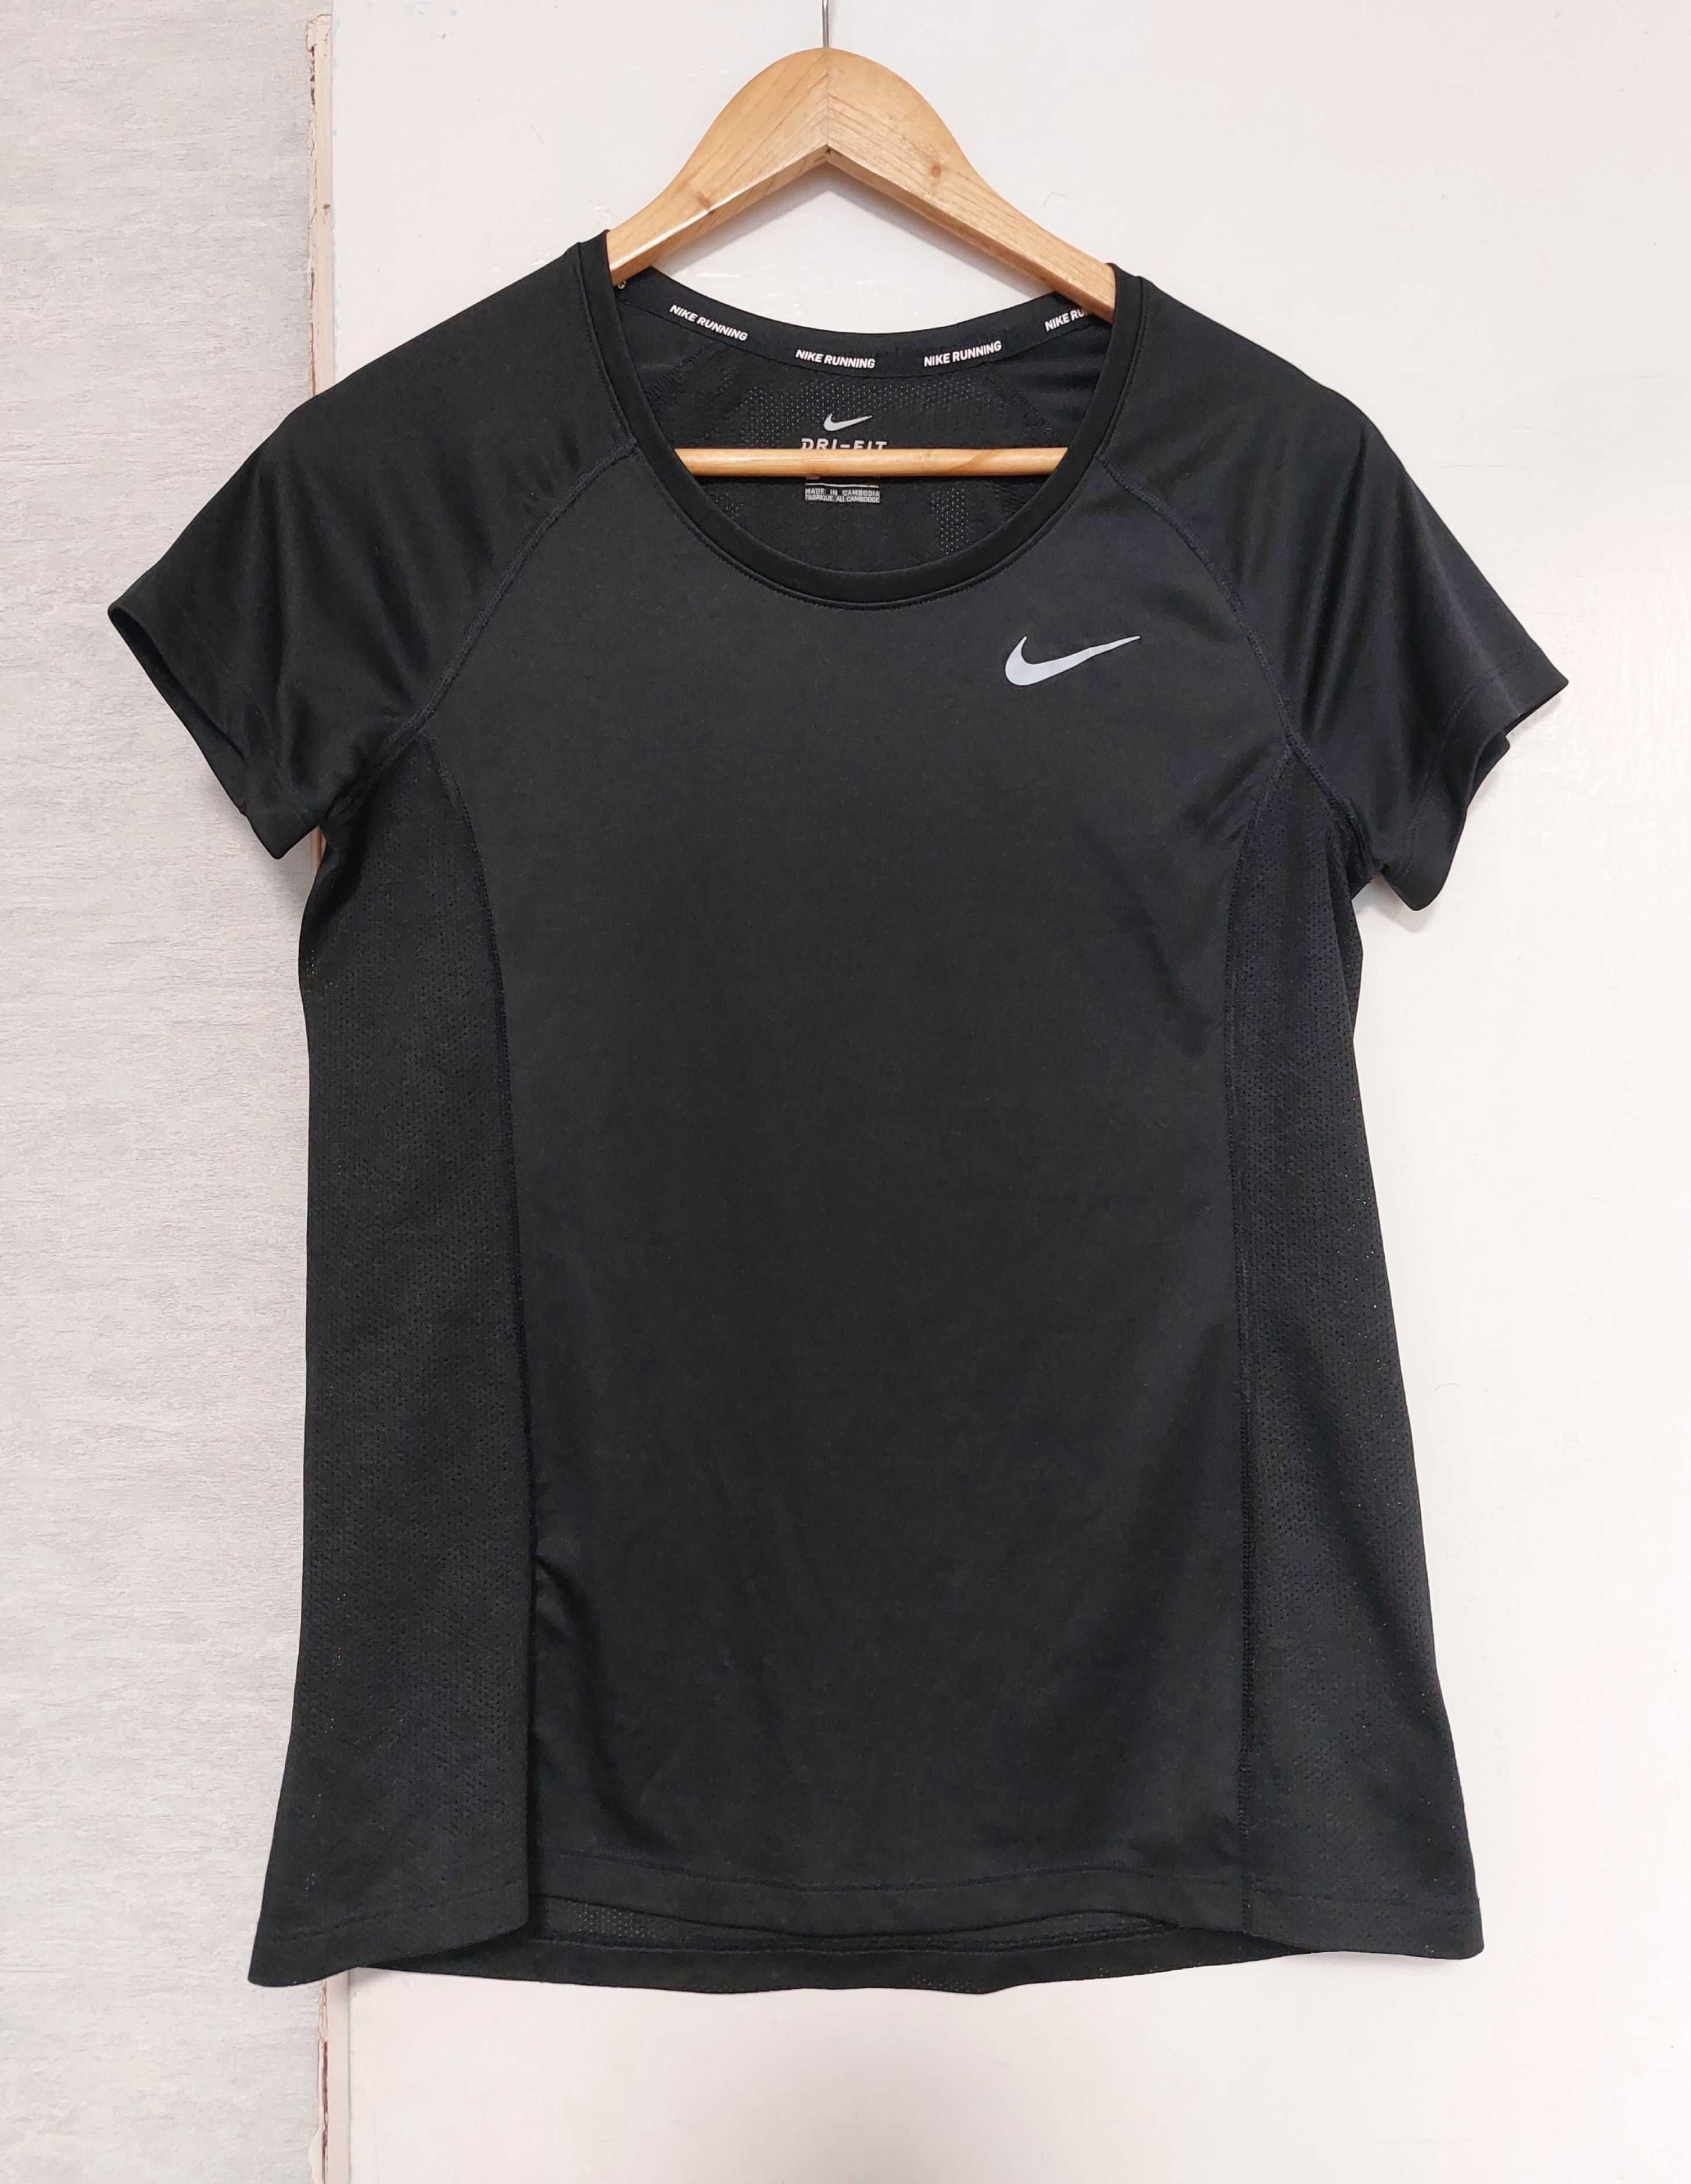 Женская спортивная футболка Nike размер М